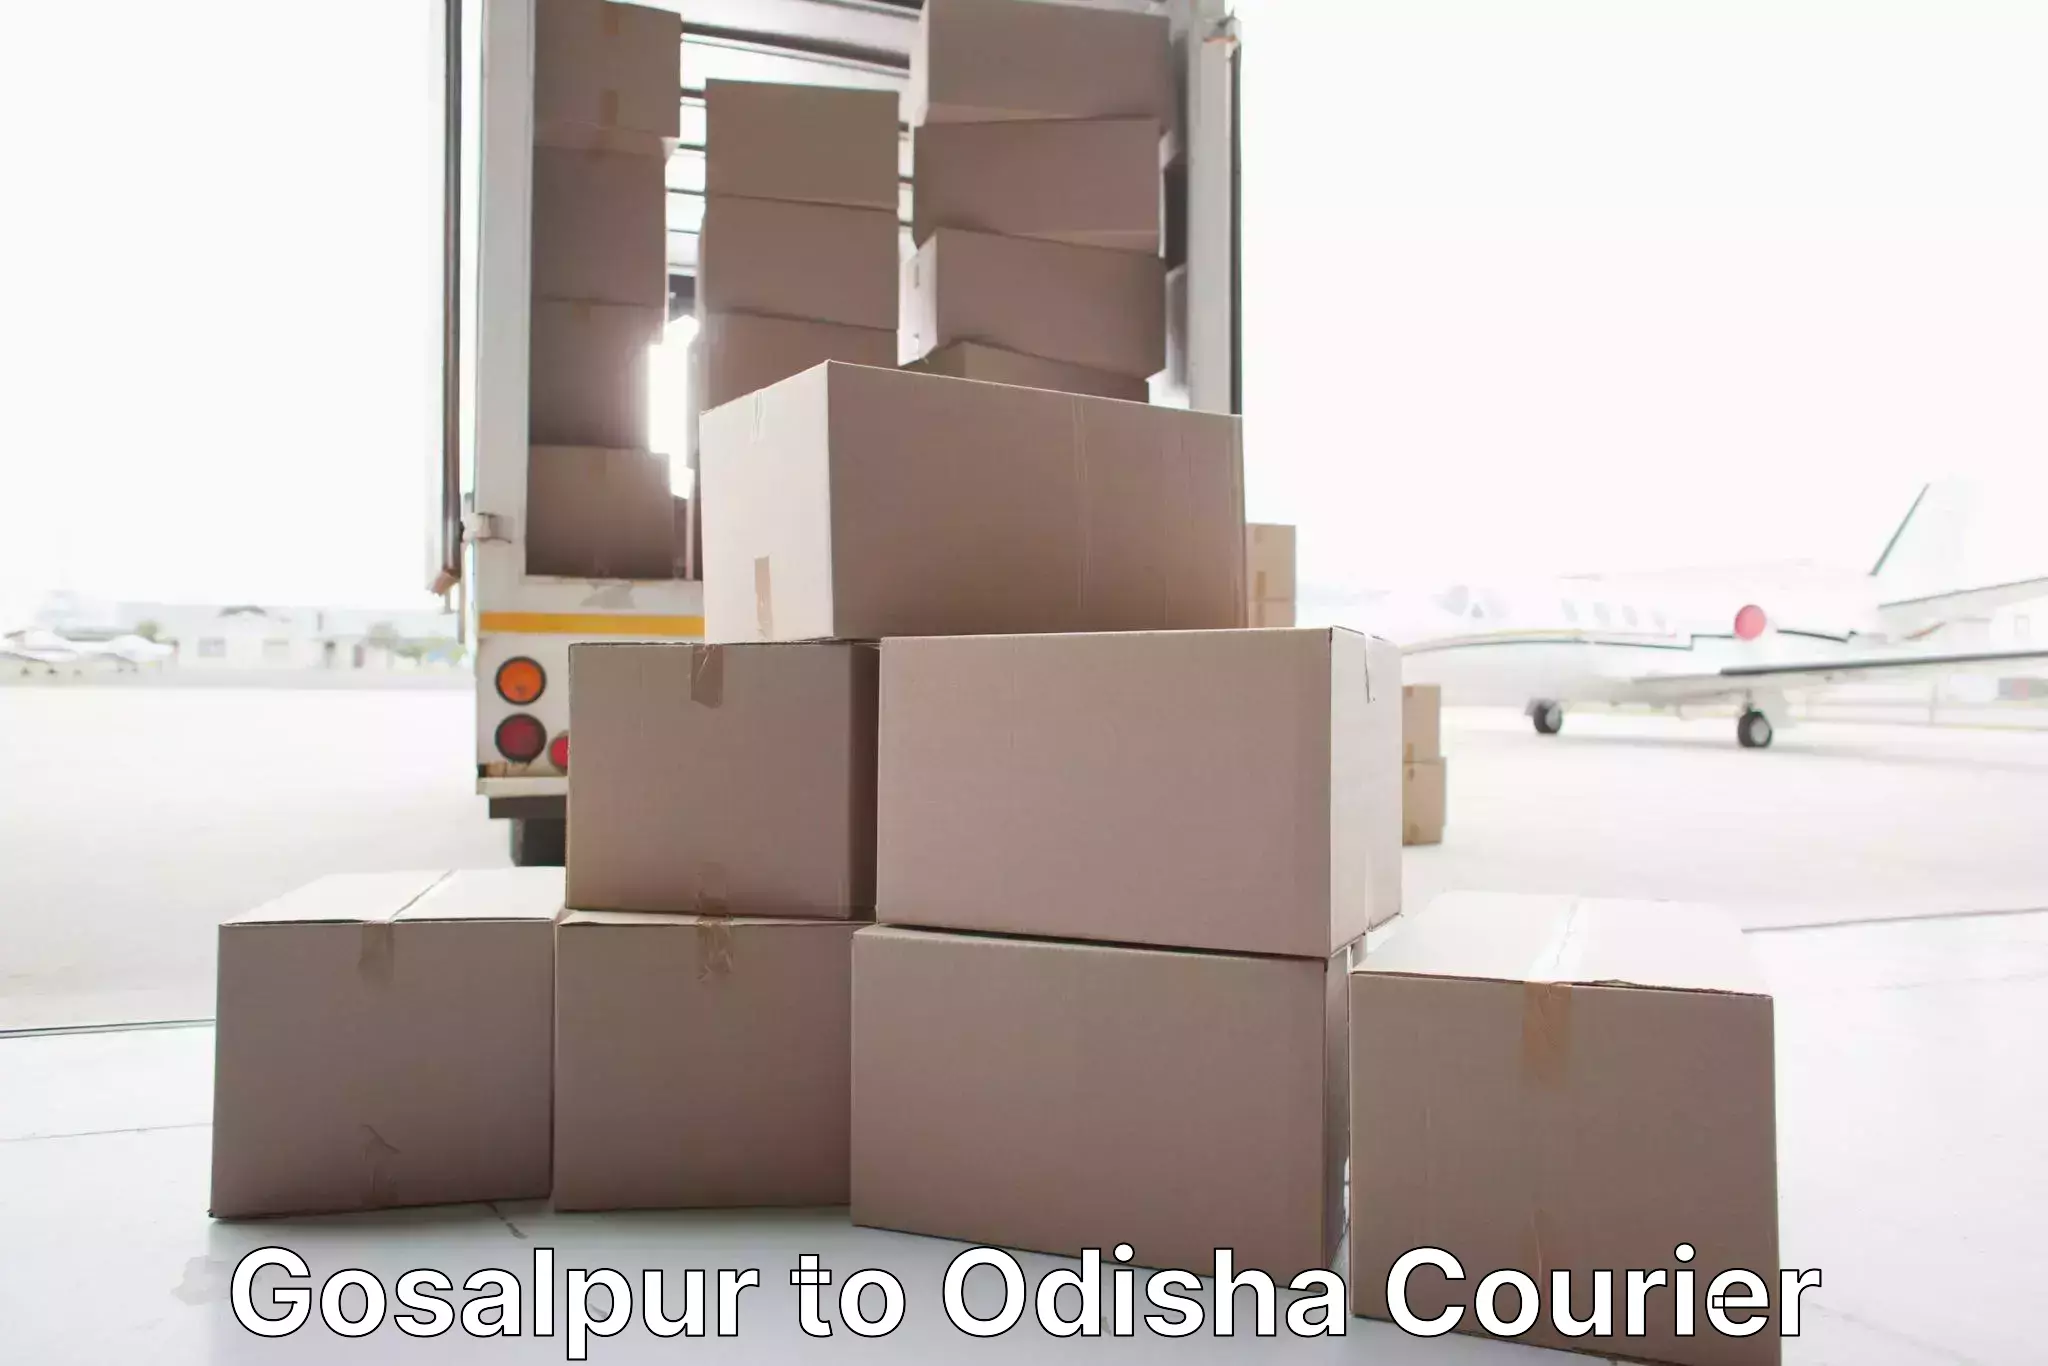 Moving and handling services Gosalpur to Odisha